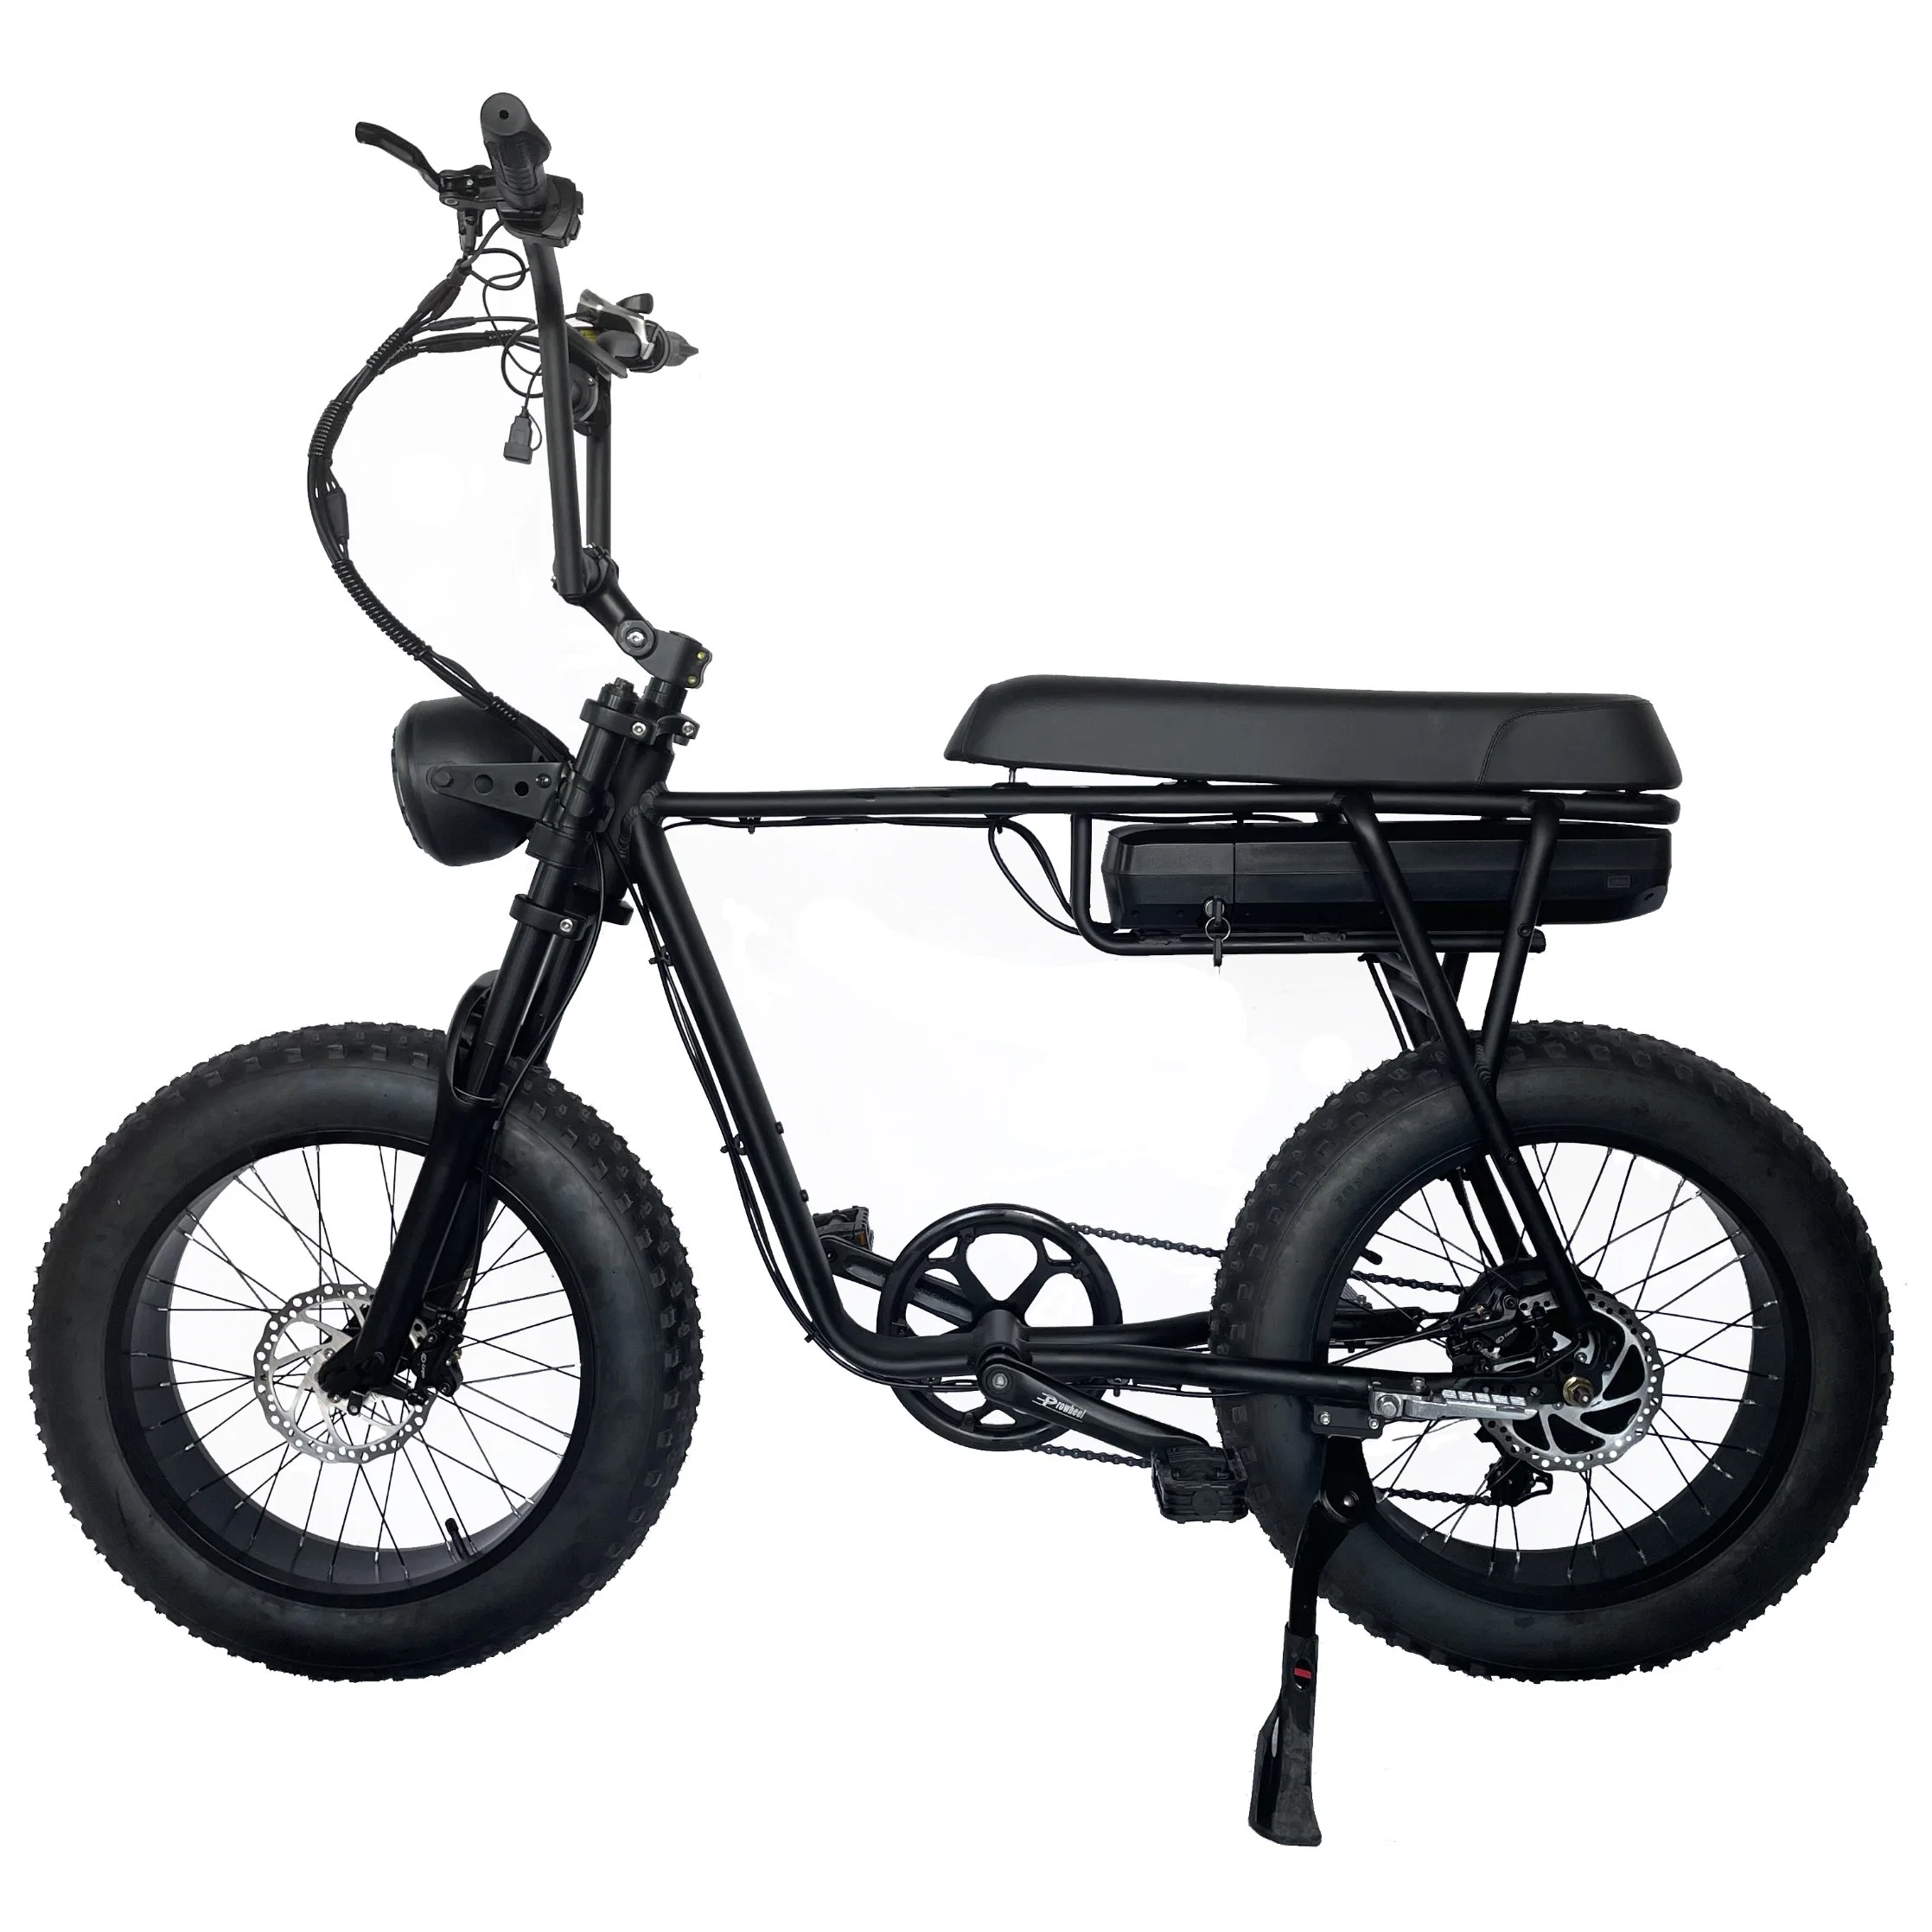 ATV bicicleta eléctrica 750W 1000W Motor 48V 20inch neumático de grasa Long Range E bicicleta fuera de carretera MID Drive Display motocicleta Bicicleta eléctrica de freno hidráulico